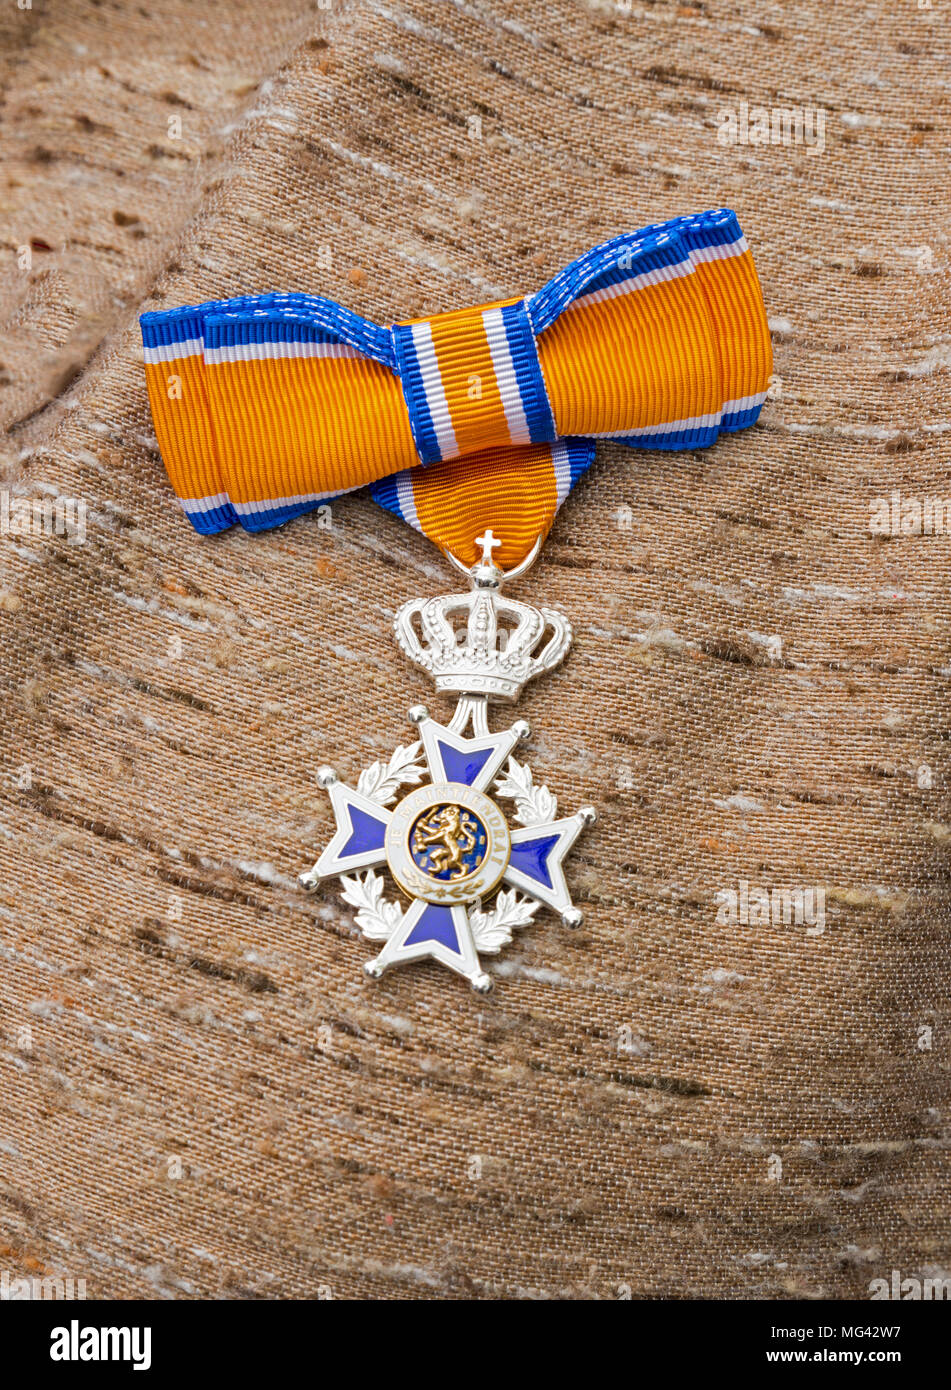 the  decoration on the Order of Orange-Nassau Stock Photo